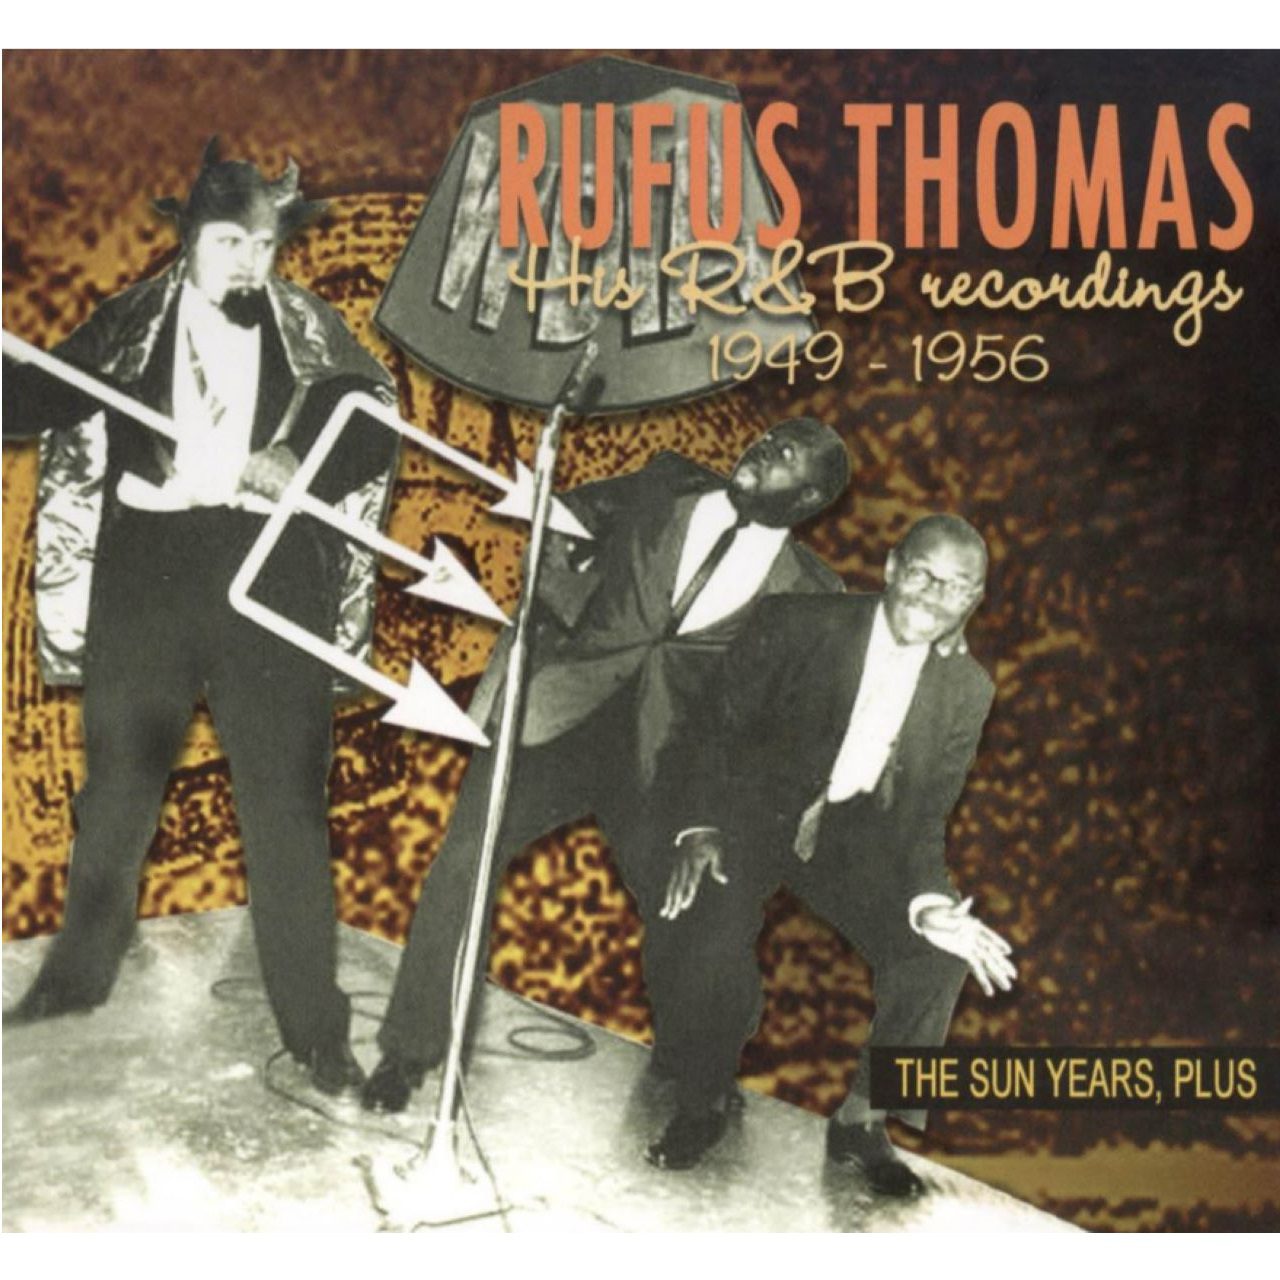 Recensione album di Rufus Thomas – “The Sun Years Plus” a cura di Roberto Arioli, fonte Jamboree n. 64, 2009